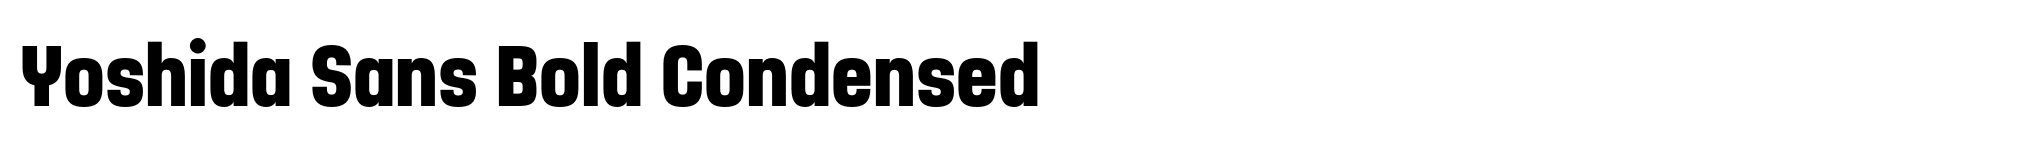 Yoshida Sans Bold Condensed image